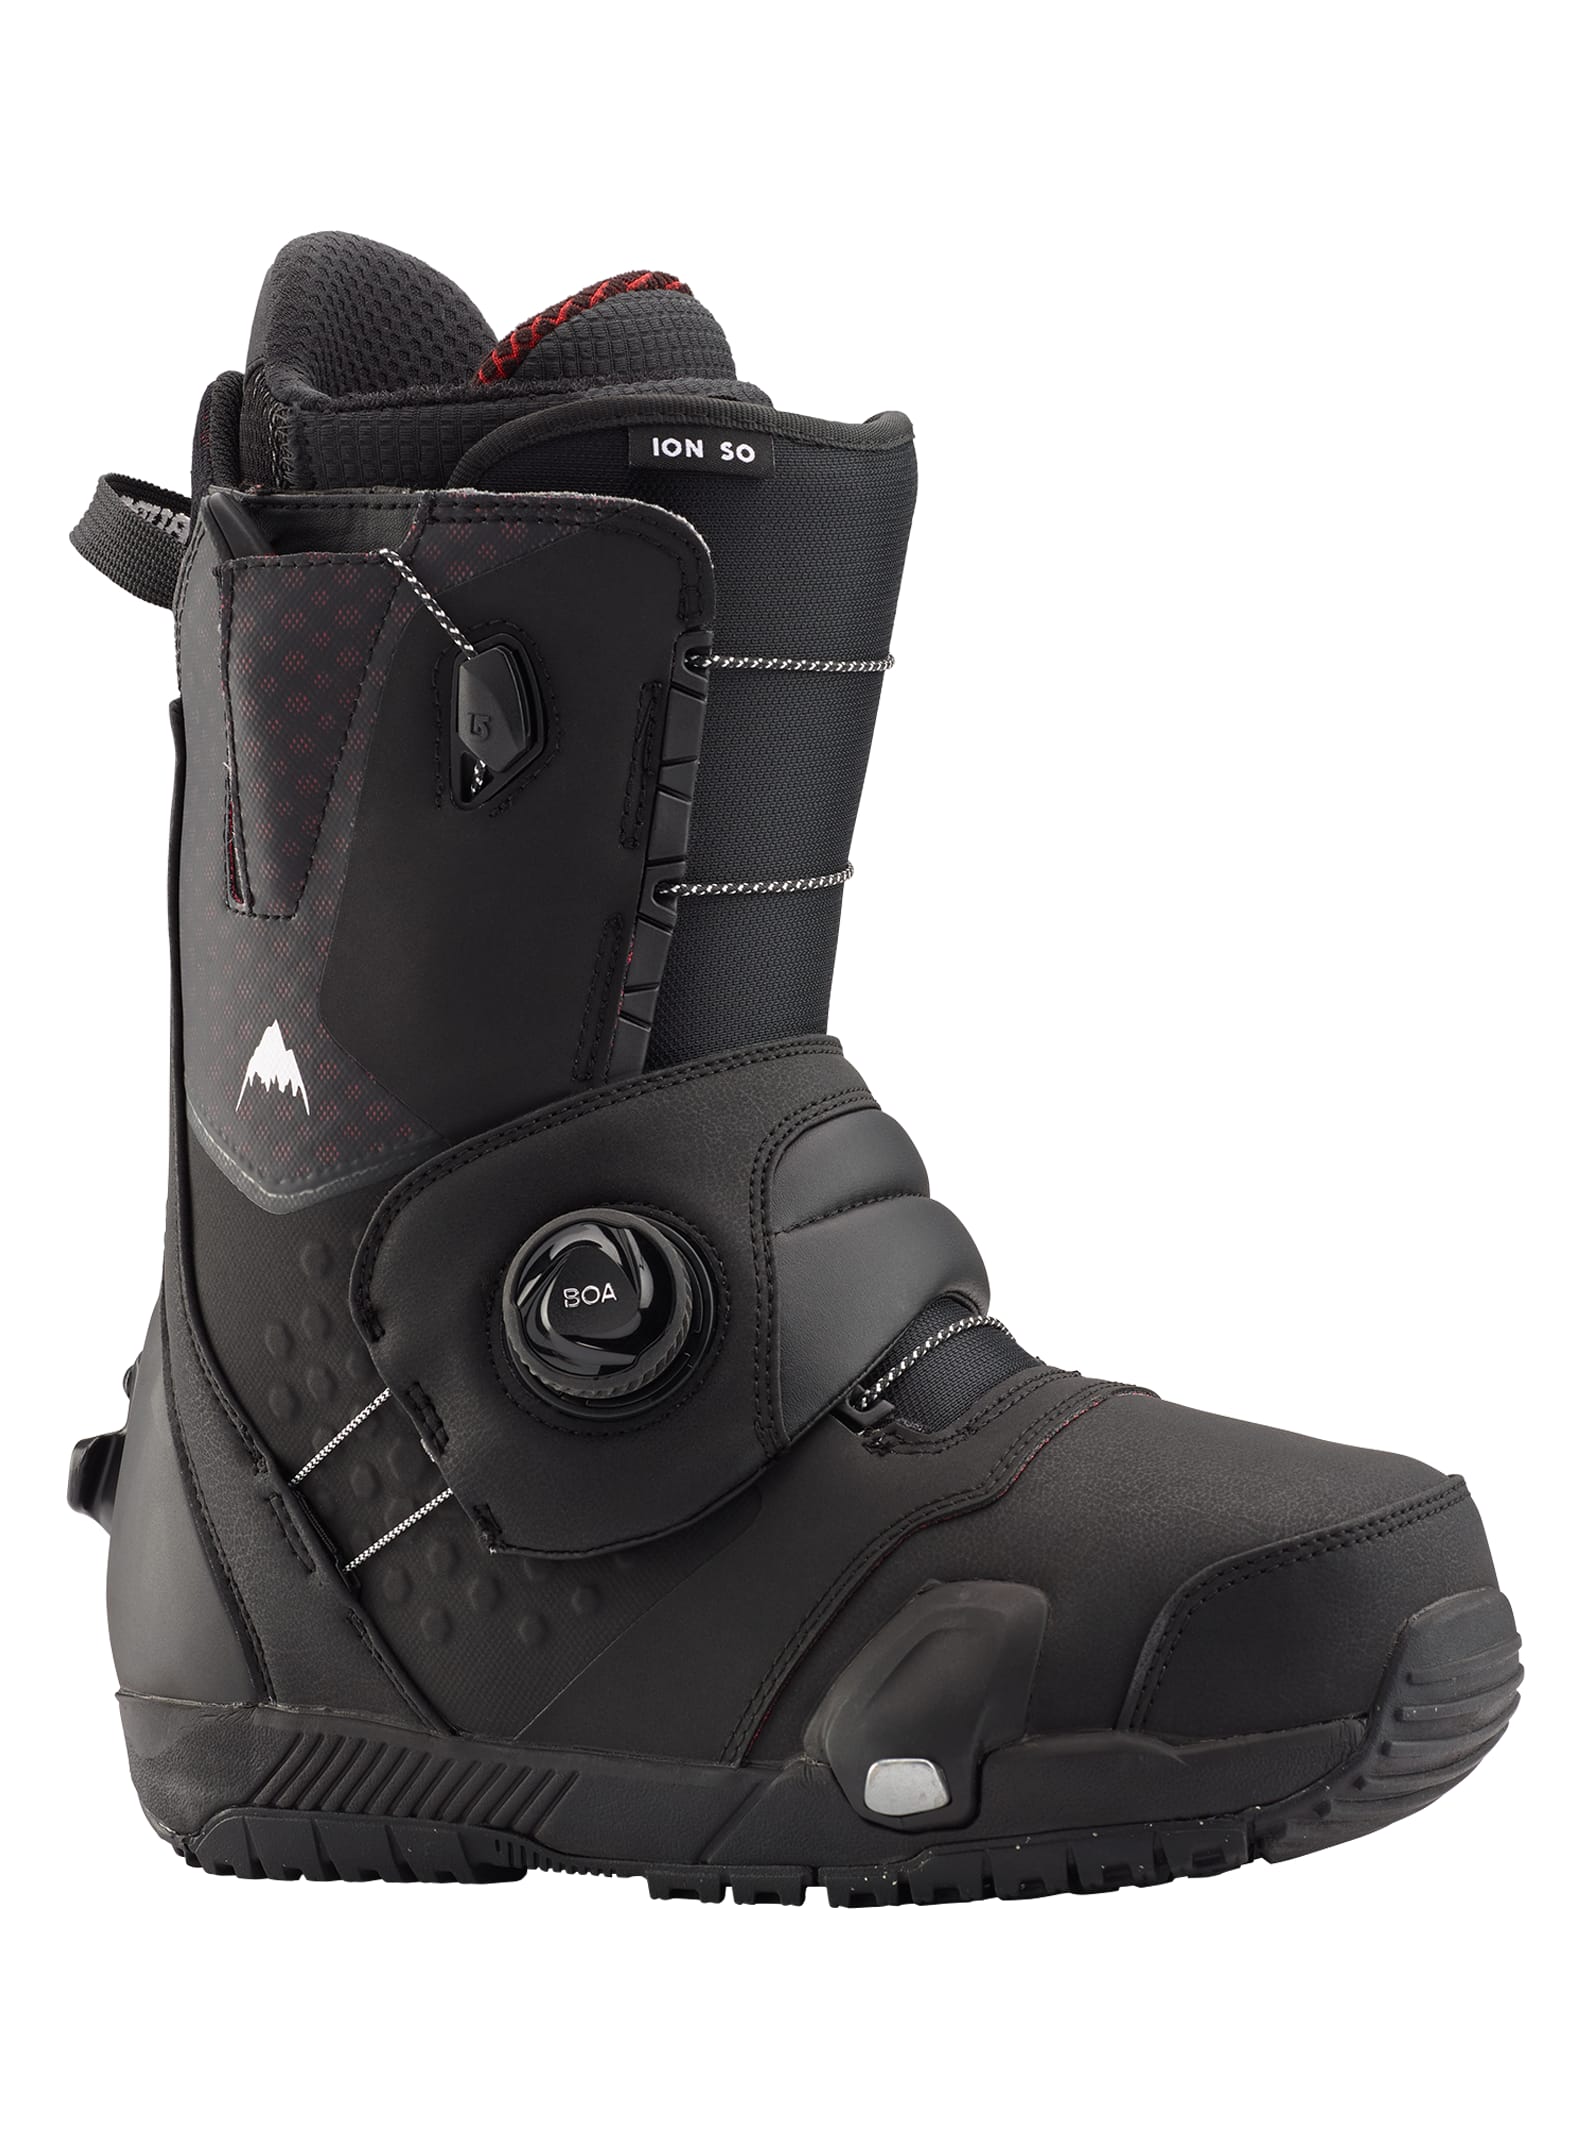 Burton - Boots Ion Step On® homme, Black, 10